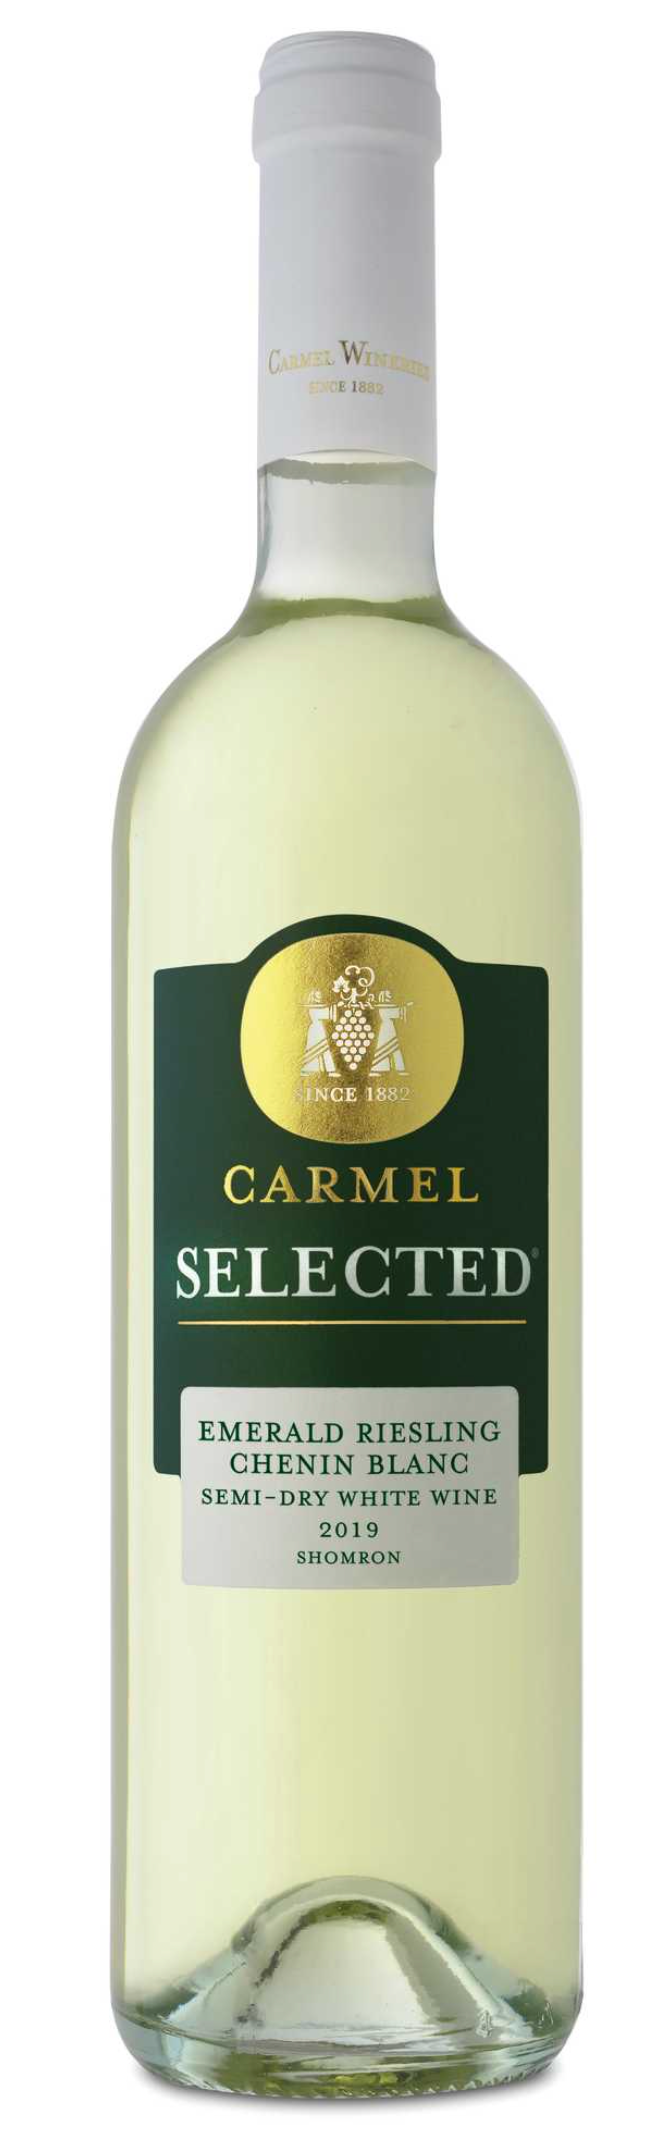 Carmel Selected Emerald Riesling - Chenin Blanc 2021